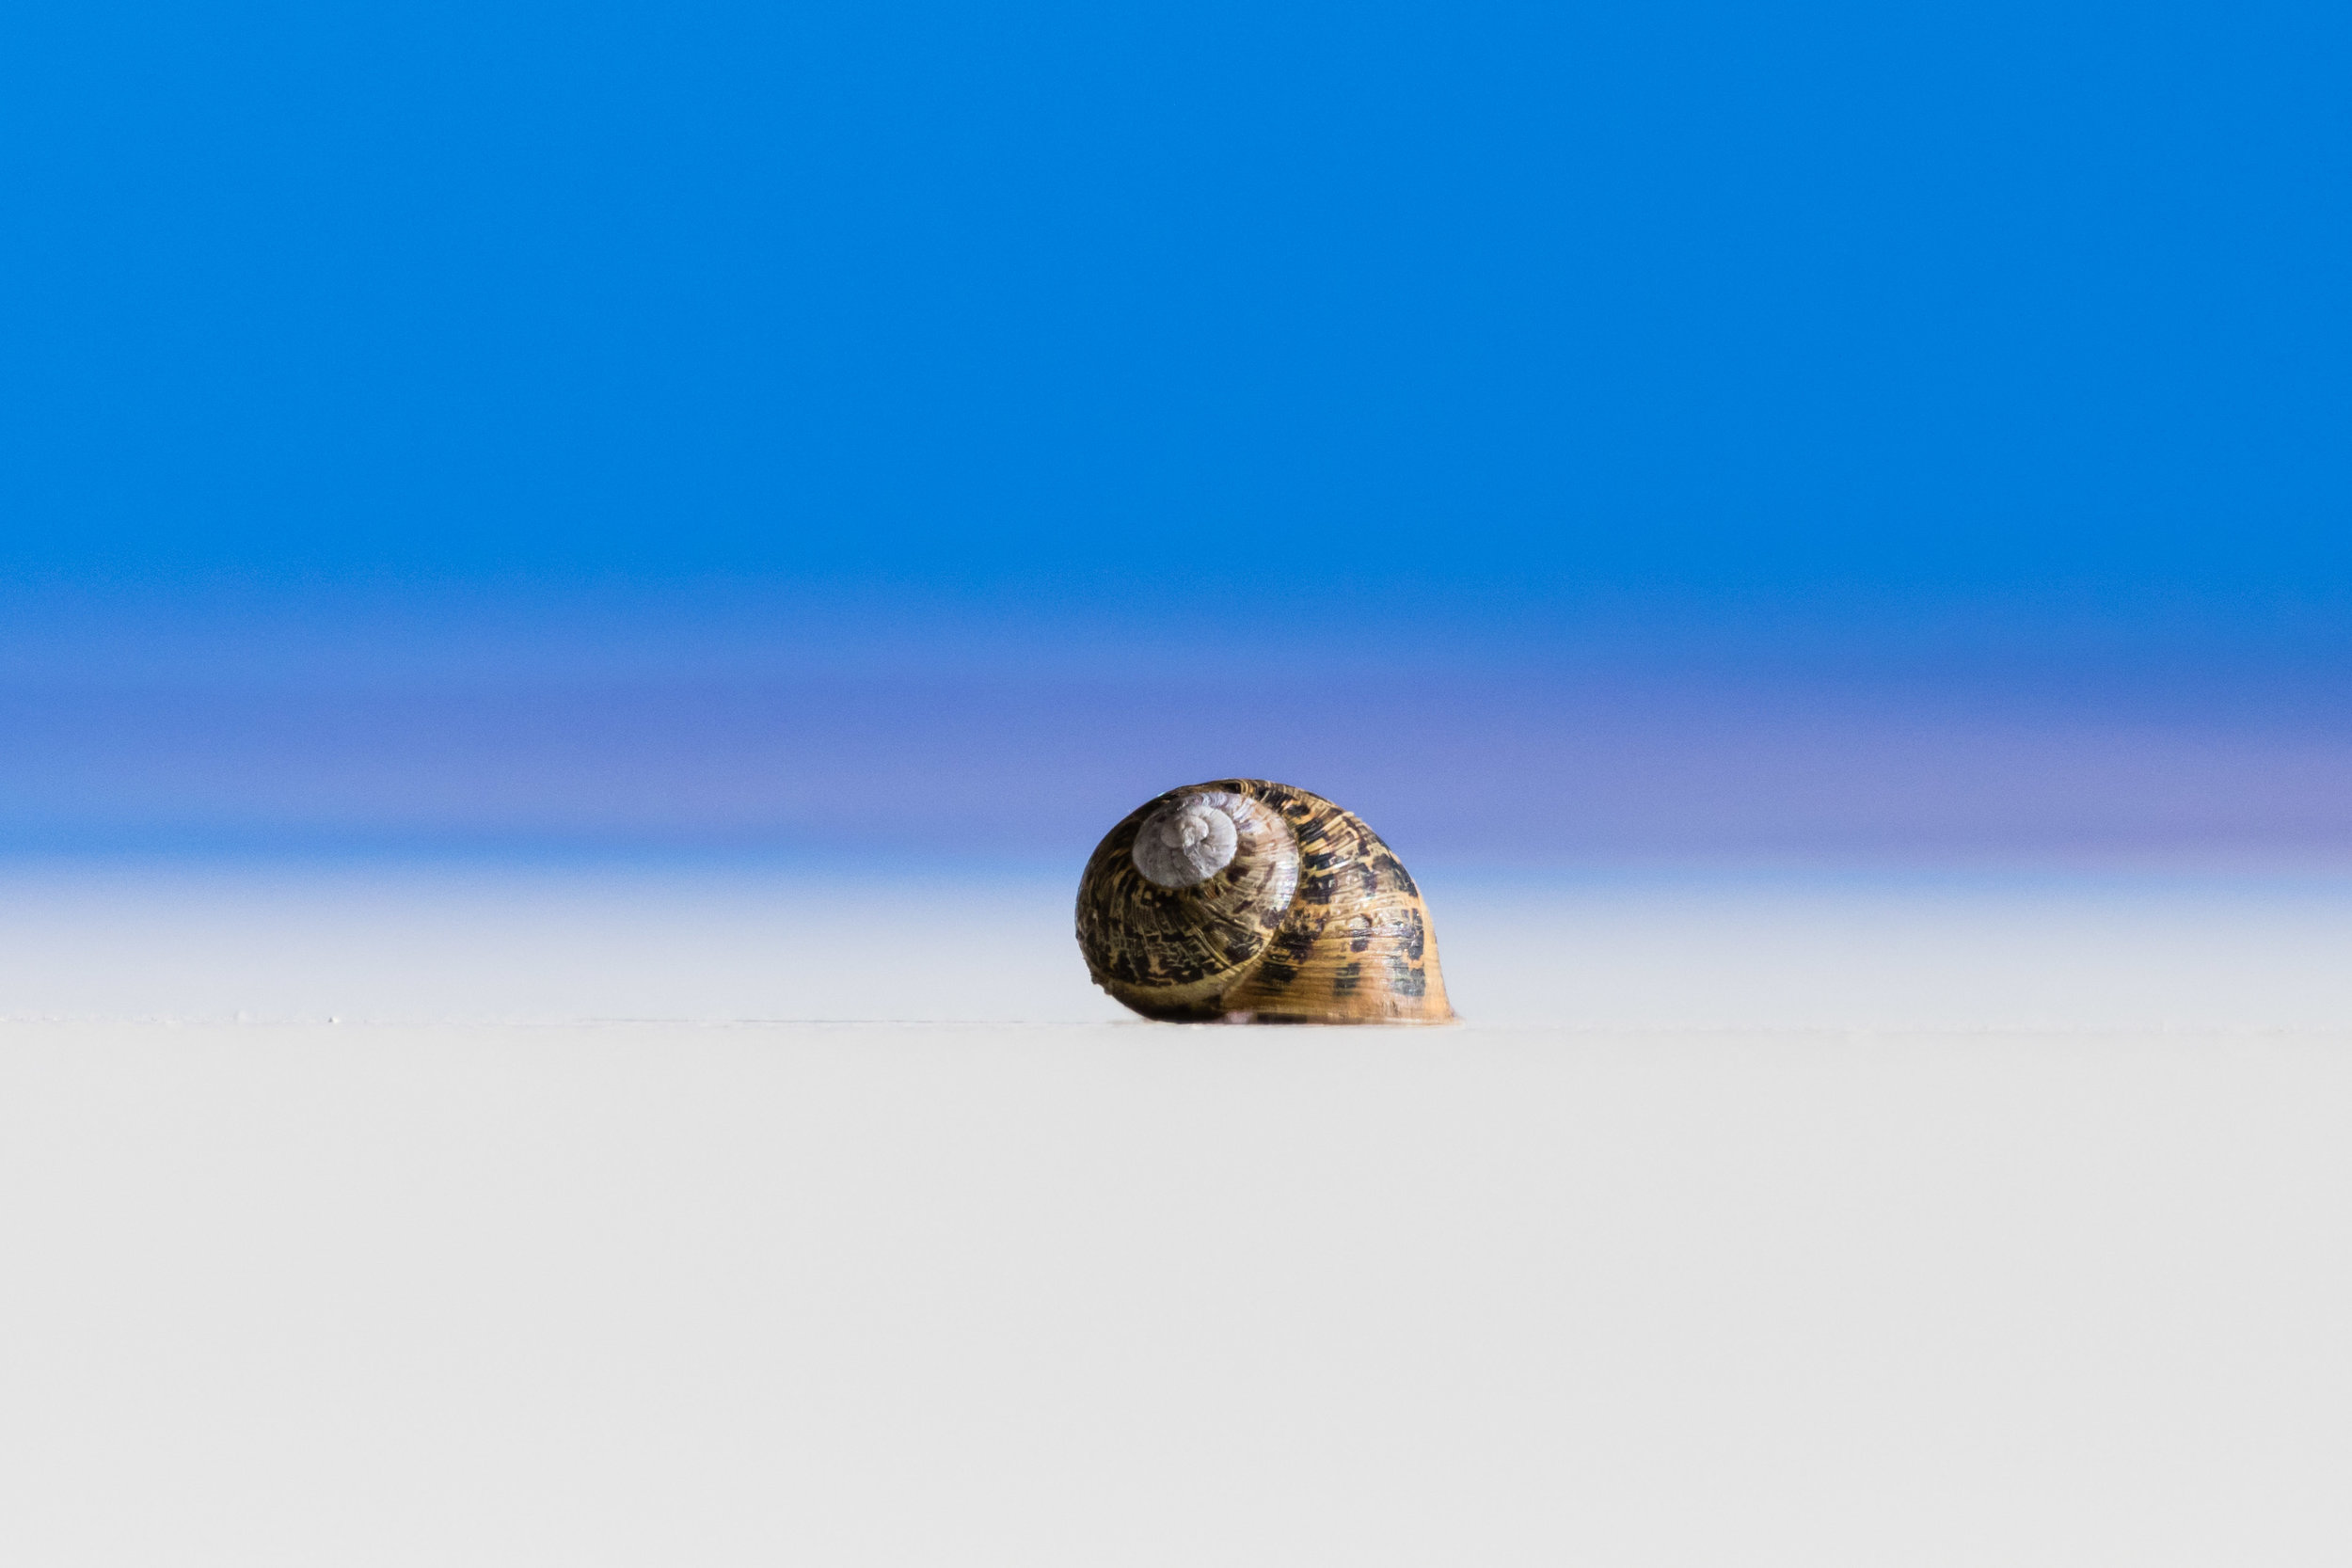 Snail on (...hmmm?).